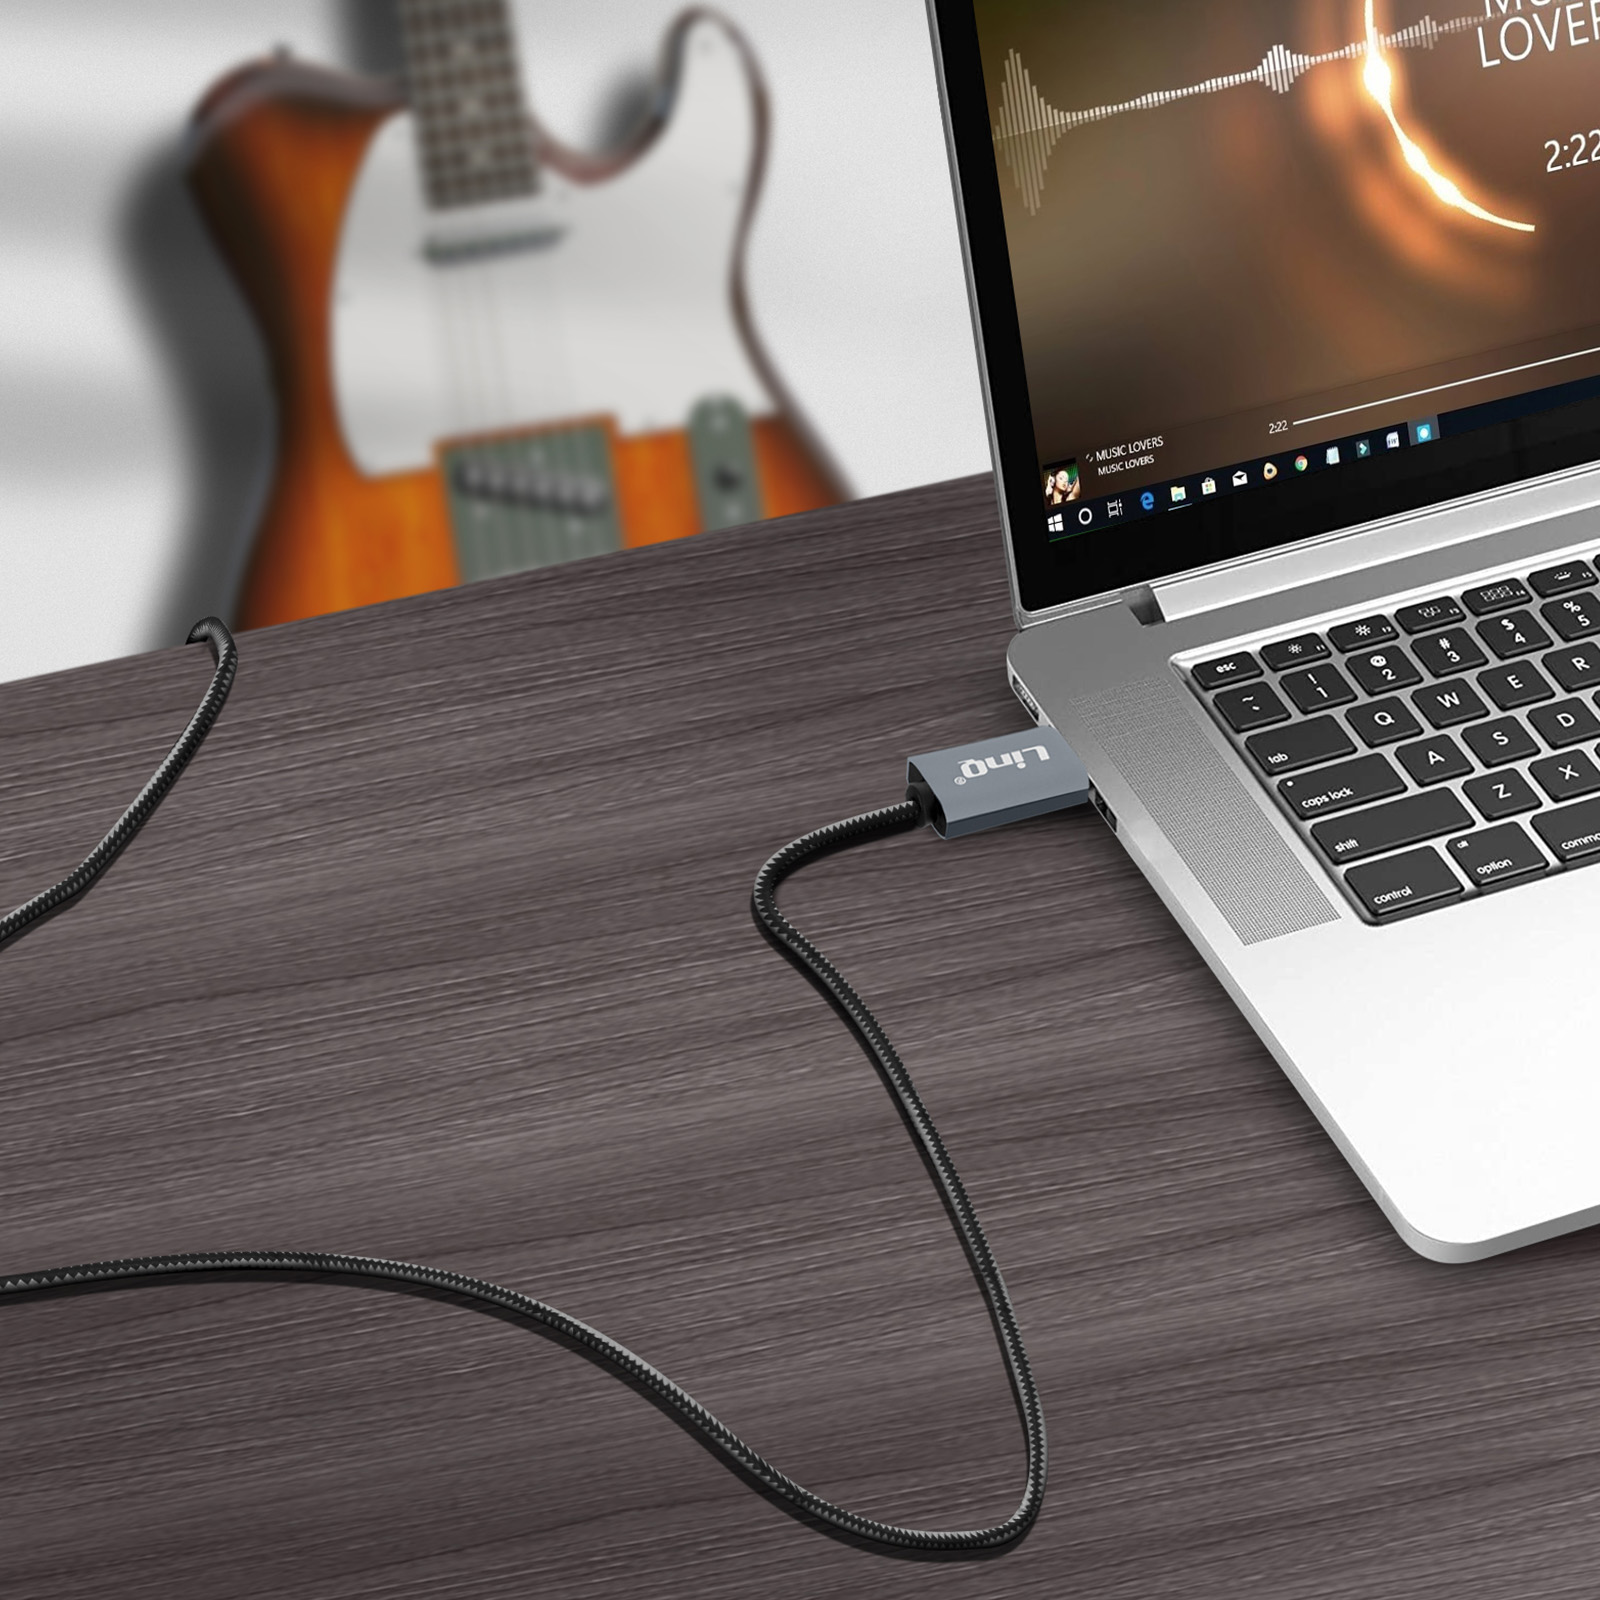 Câble Audio USB Mâle vers Jack 6.35mm Mâle Nylon Tressé 3m, LinQ